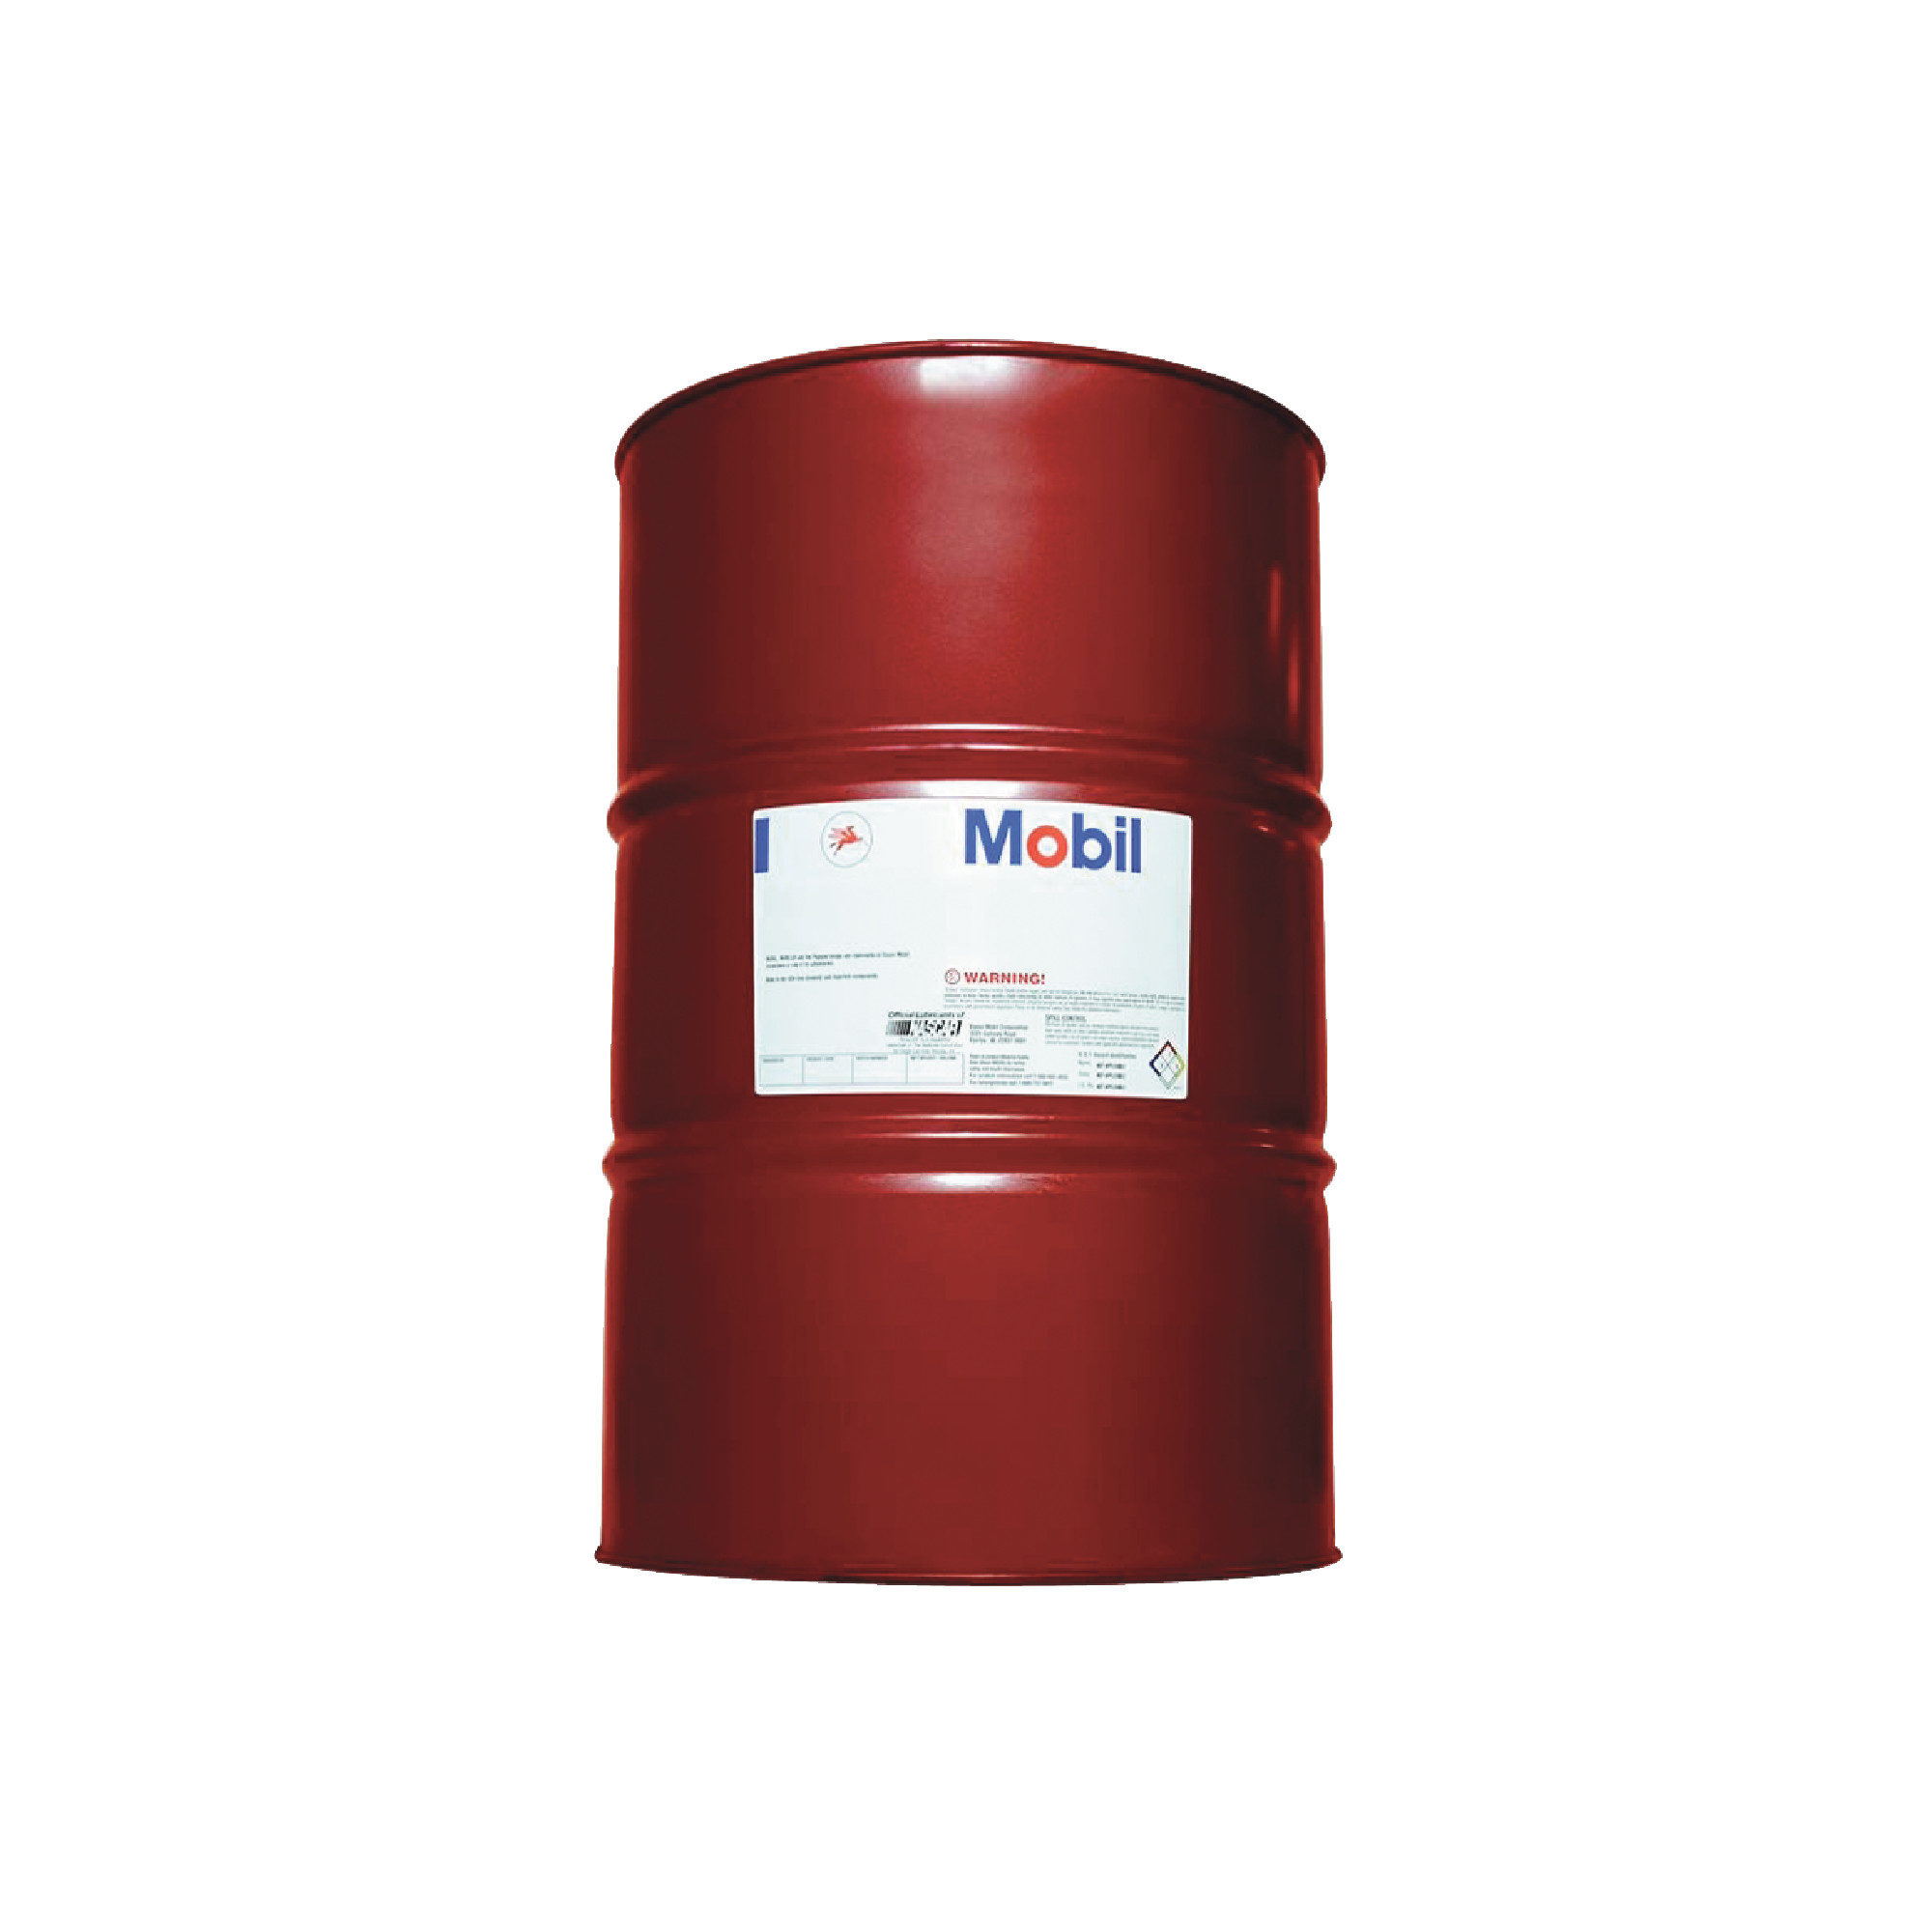 MOBIL DTE 10 EXCEL 46 55 Gallon Drum Hydraulic Fluid